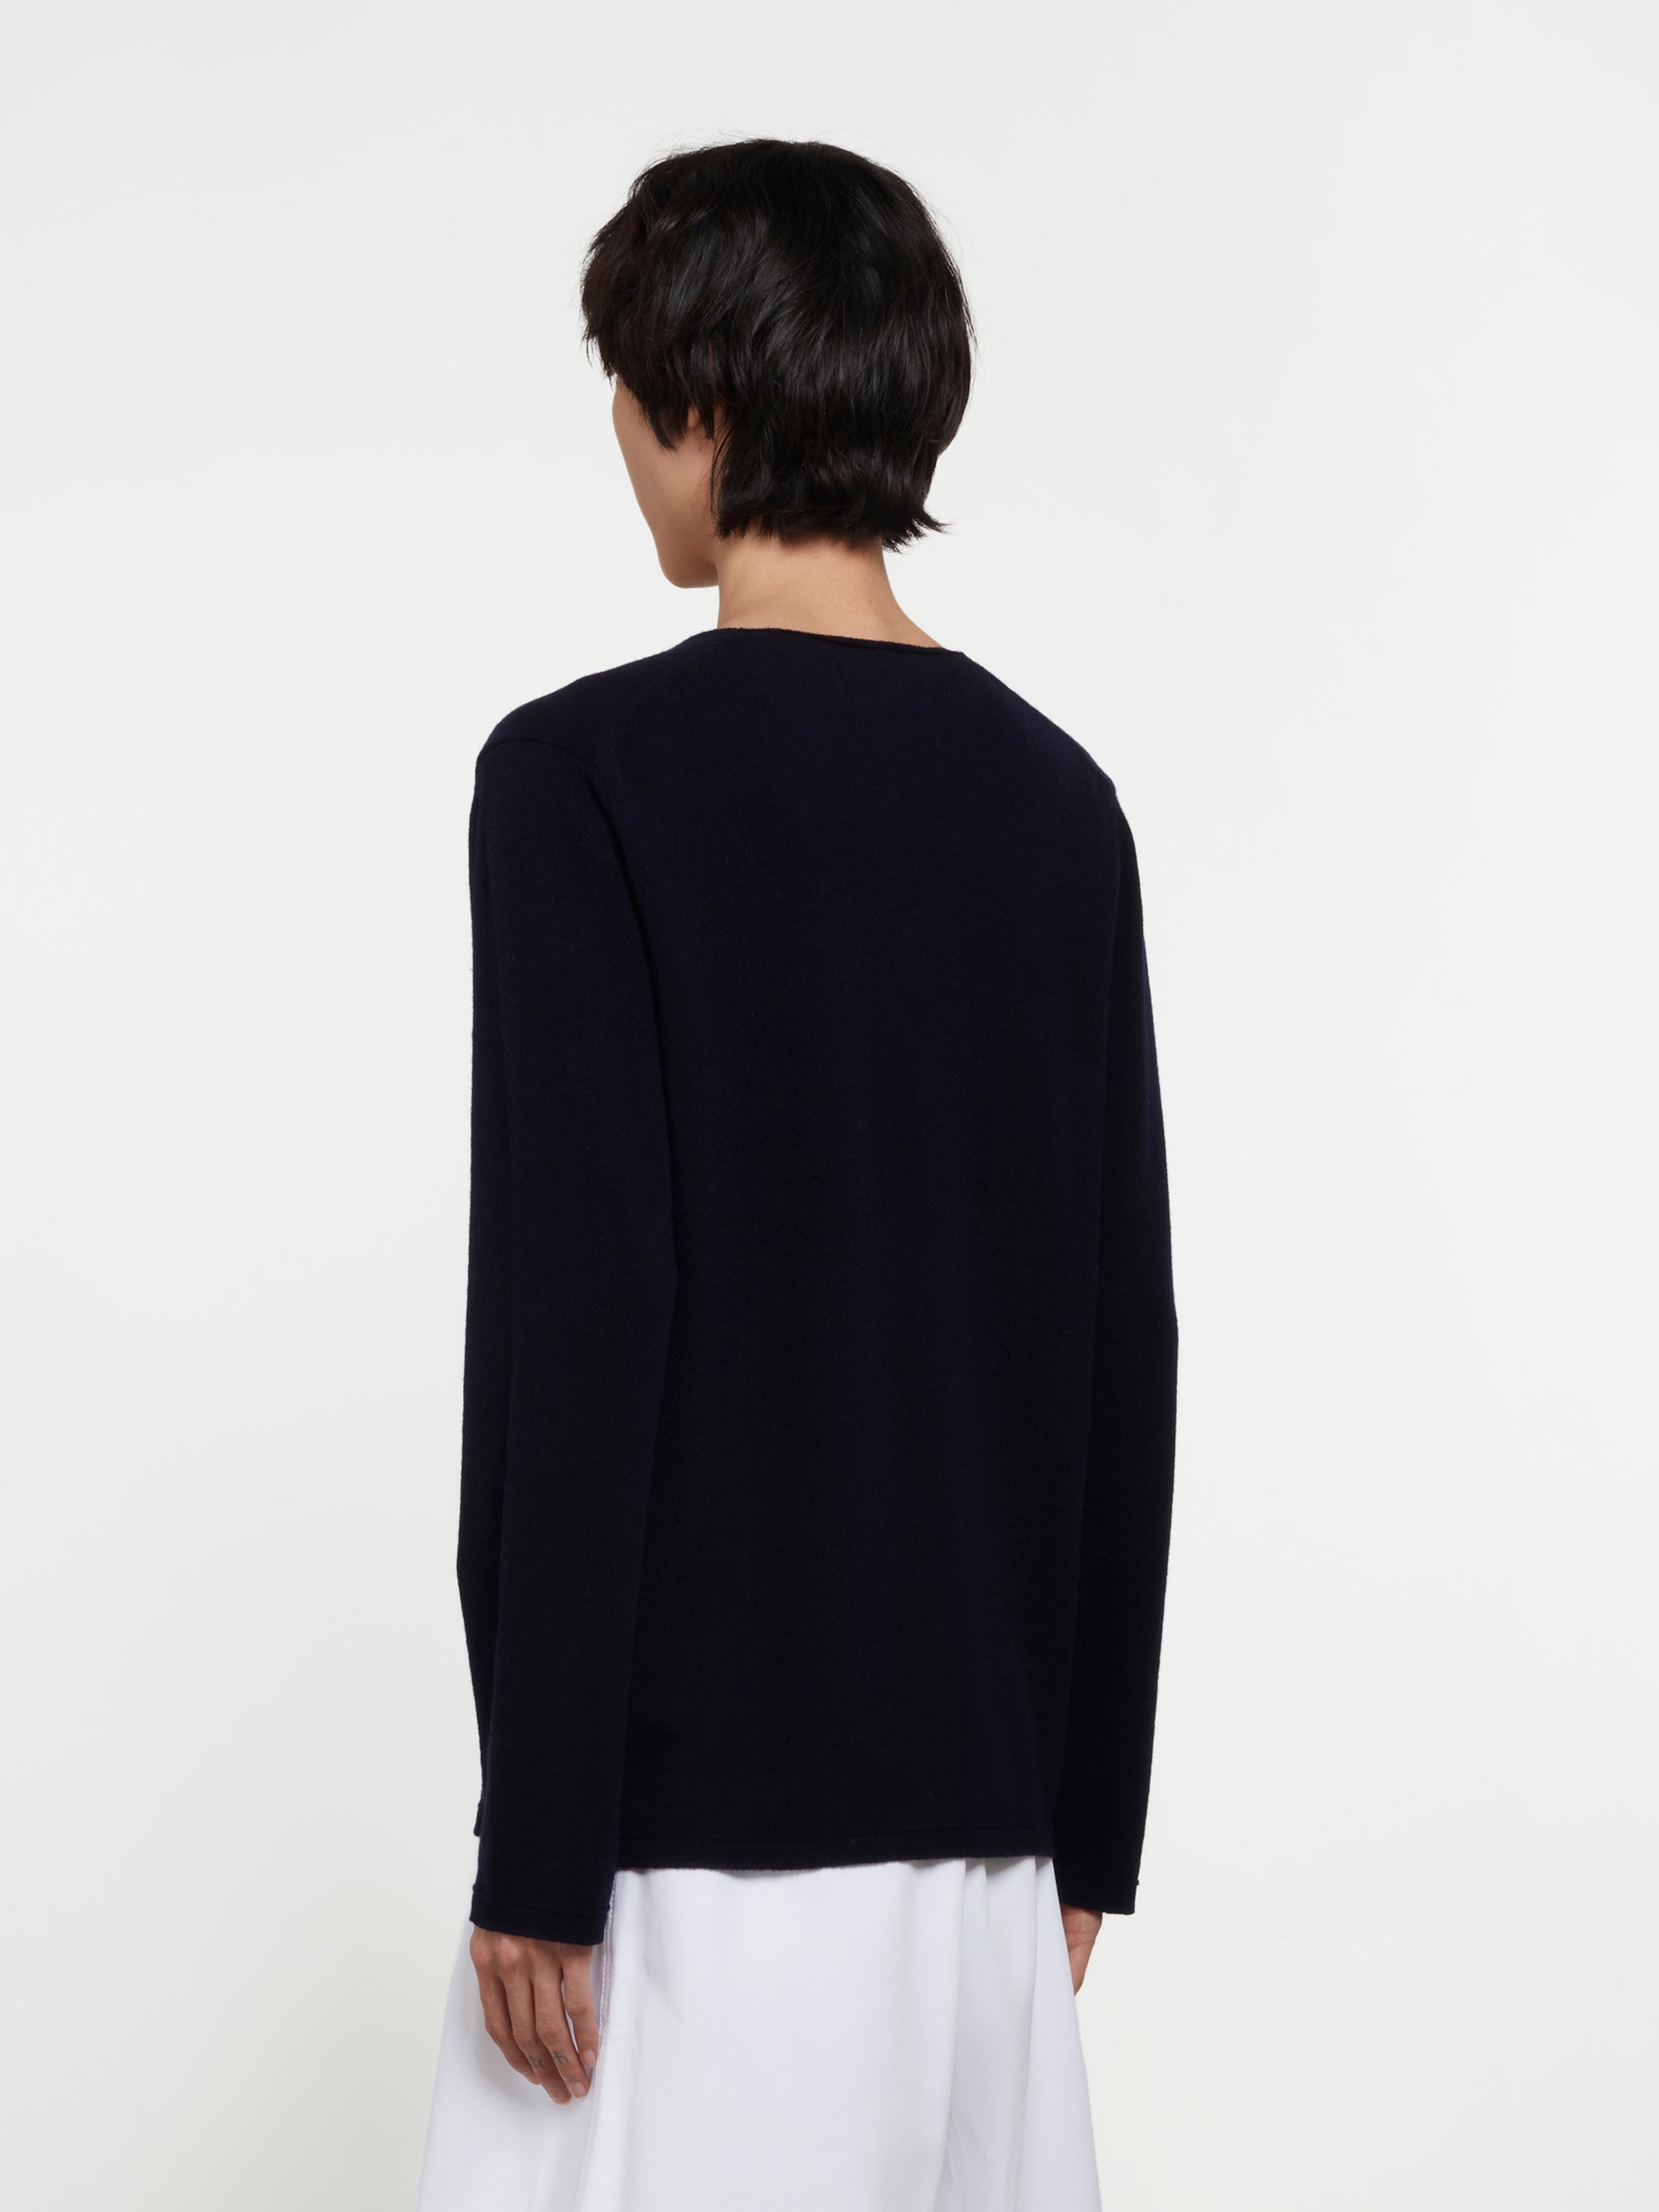 CDG Shirt - Lacoste Men's Knit Sweater - (Black) view 3